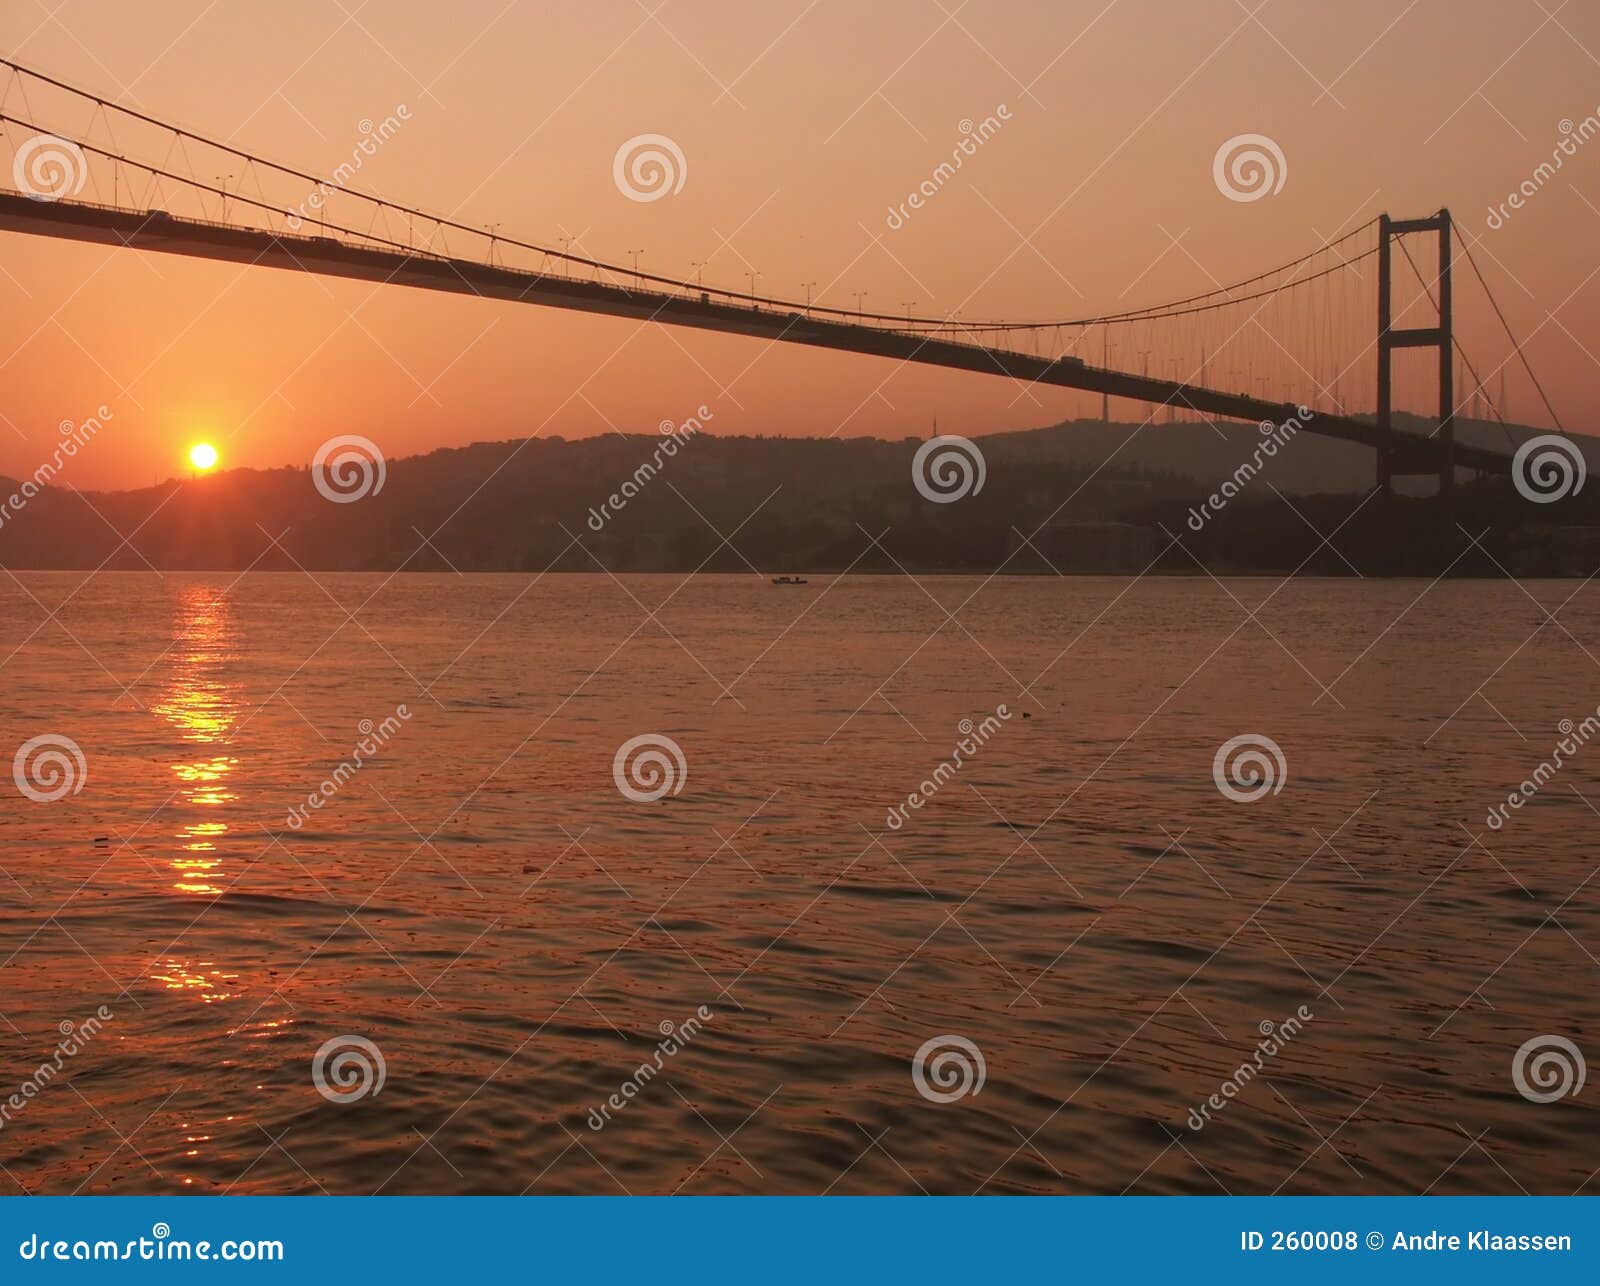 bosporus bridge at sunrise